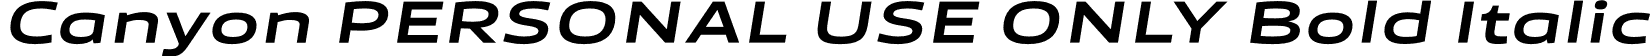 Canyon PERSONAL USE ONLY Bold Italic font | CanyonPersonalUseOnlyBoldItalic-z8qKl.otf